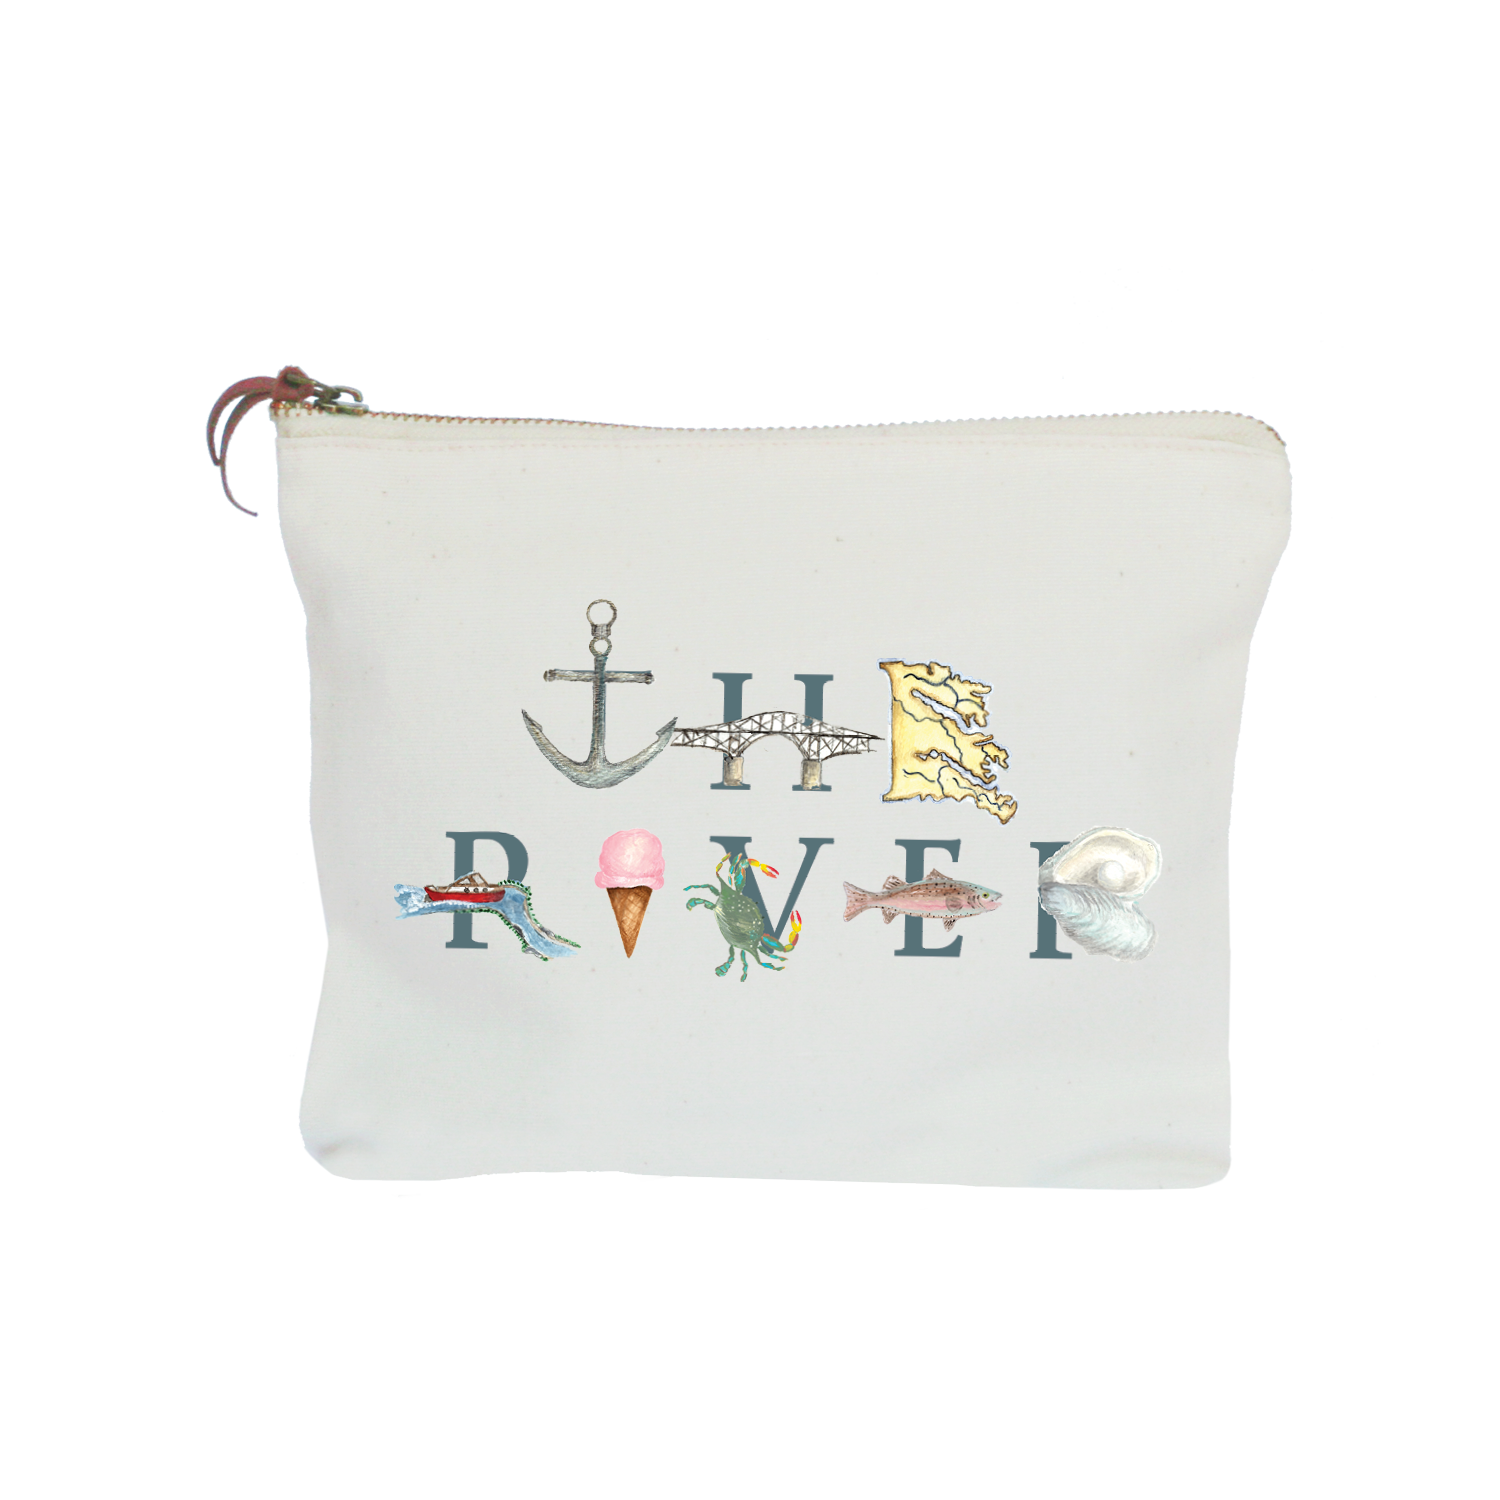 The River zipper pouch